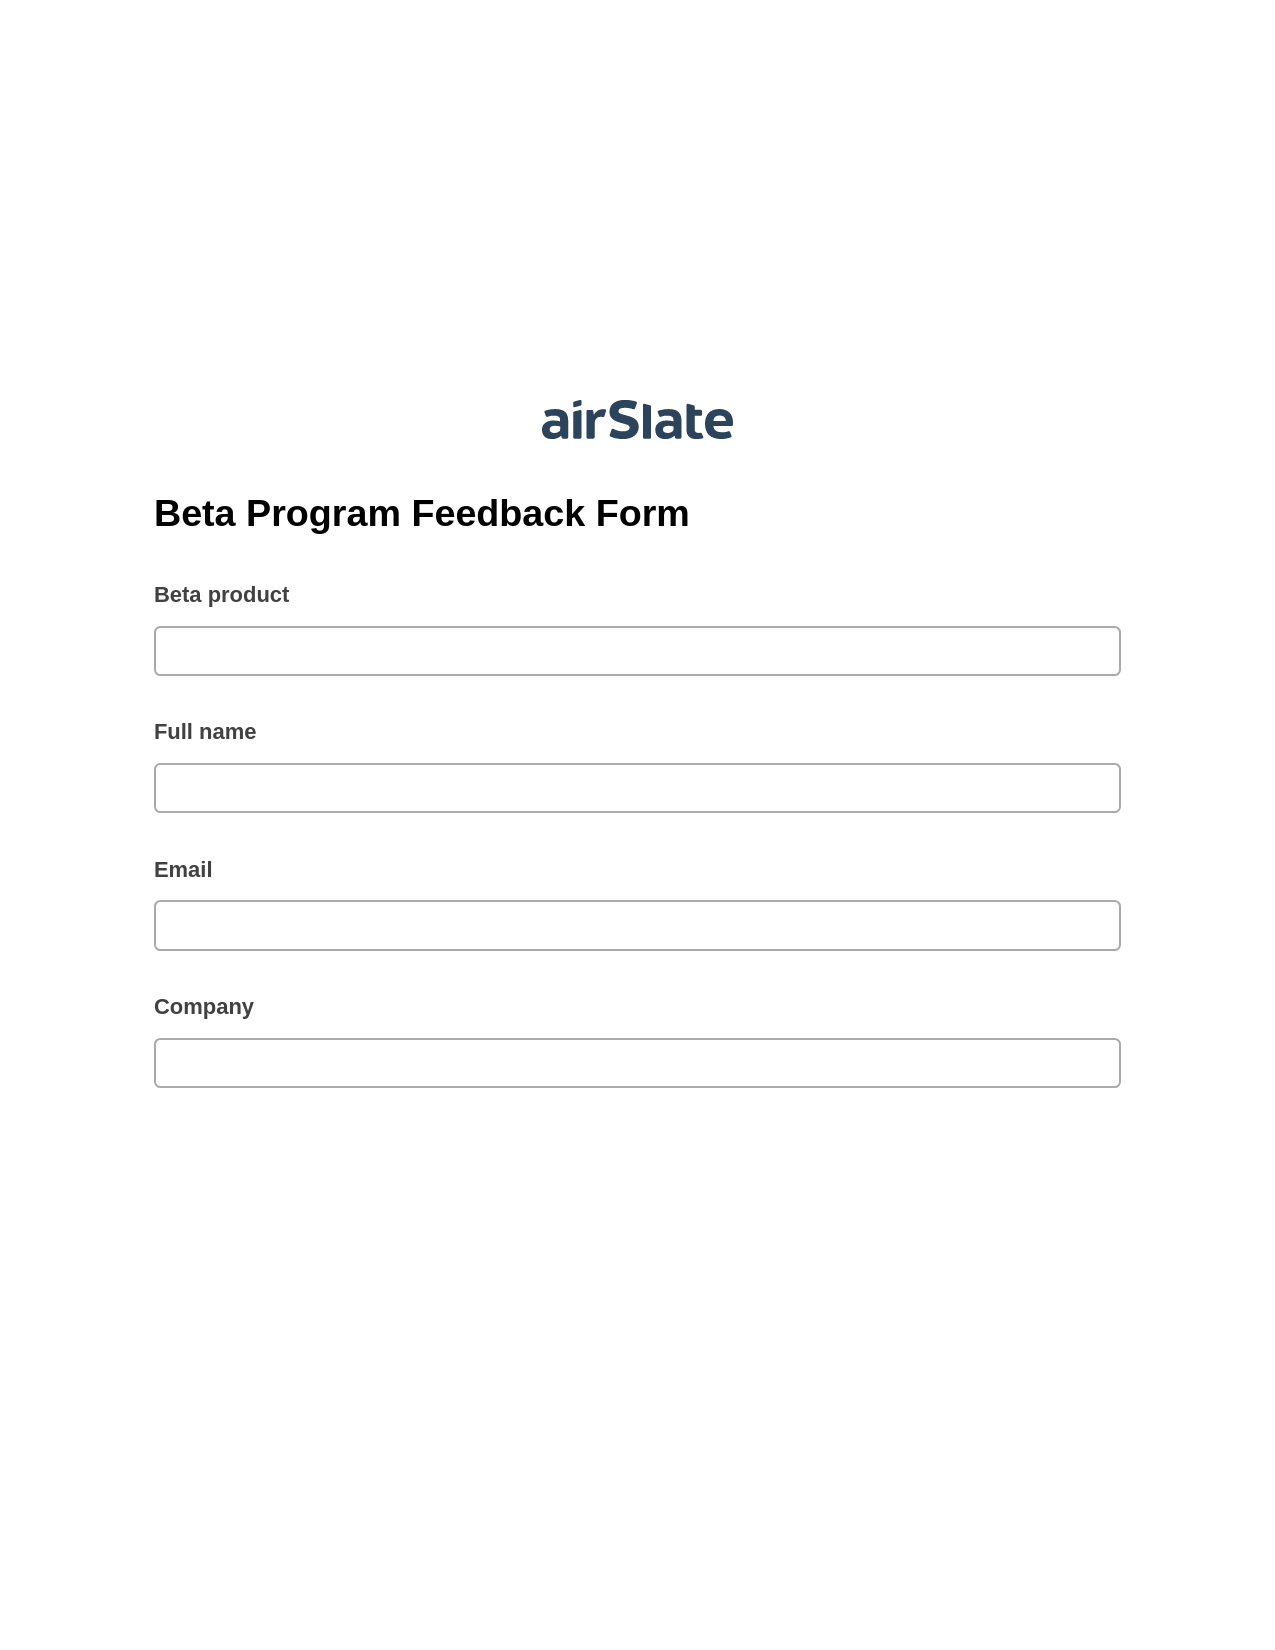 Beta Program Feedback Form Pre-fill Slate from MS Dynamics 365 Records Bot, Webhook Bot, Slack Notification Postfinish Bot